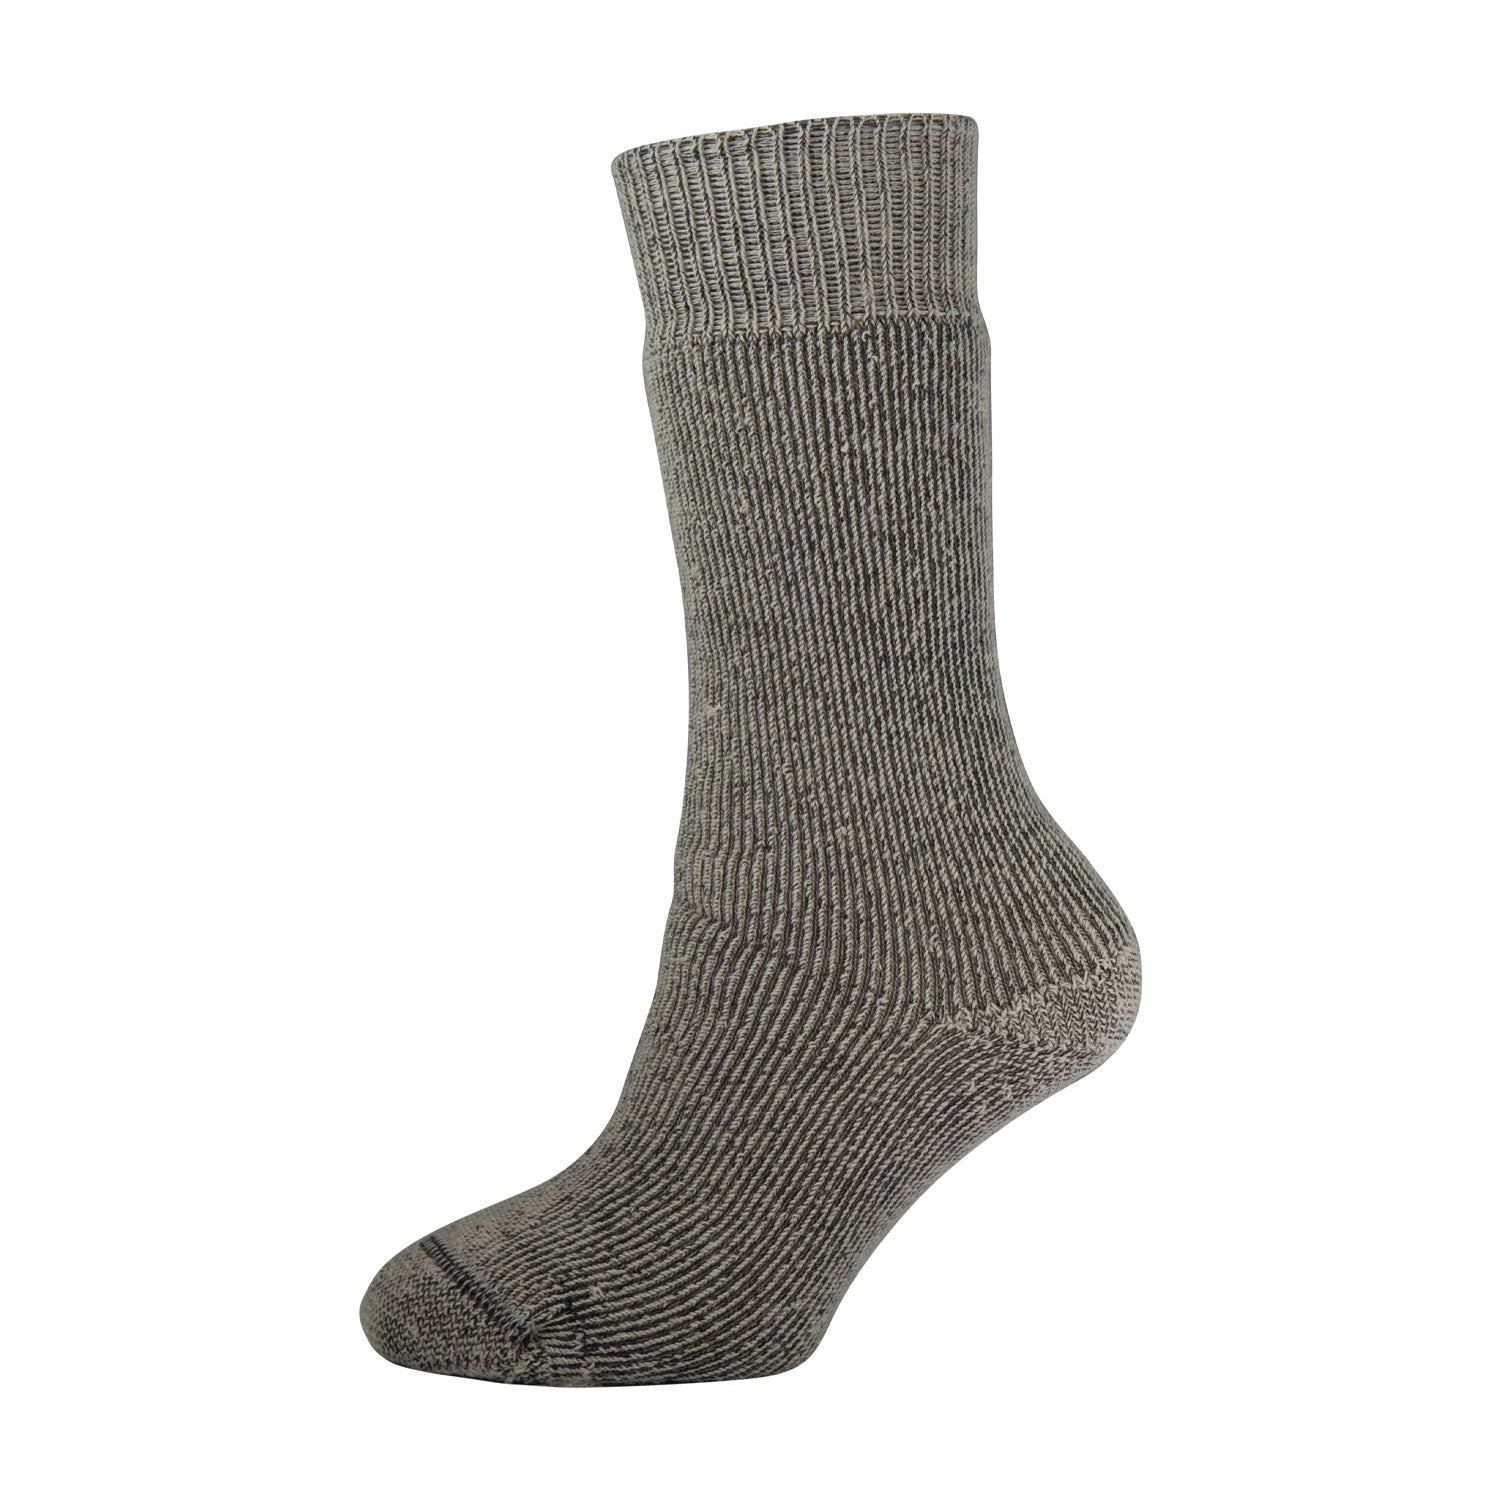 High Country Merino Wool Socks in Charcoal